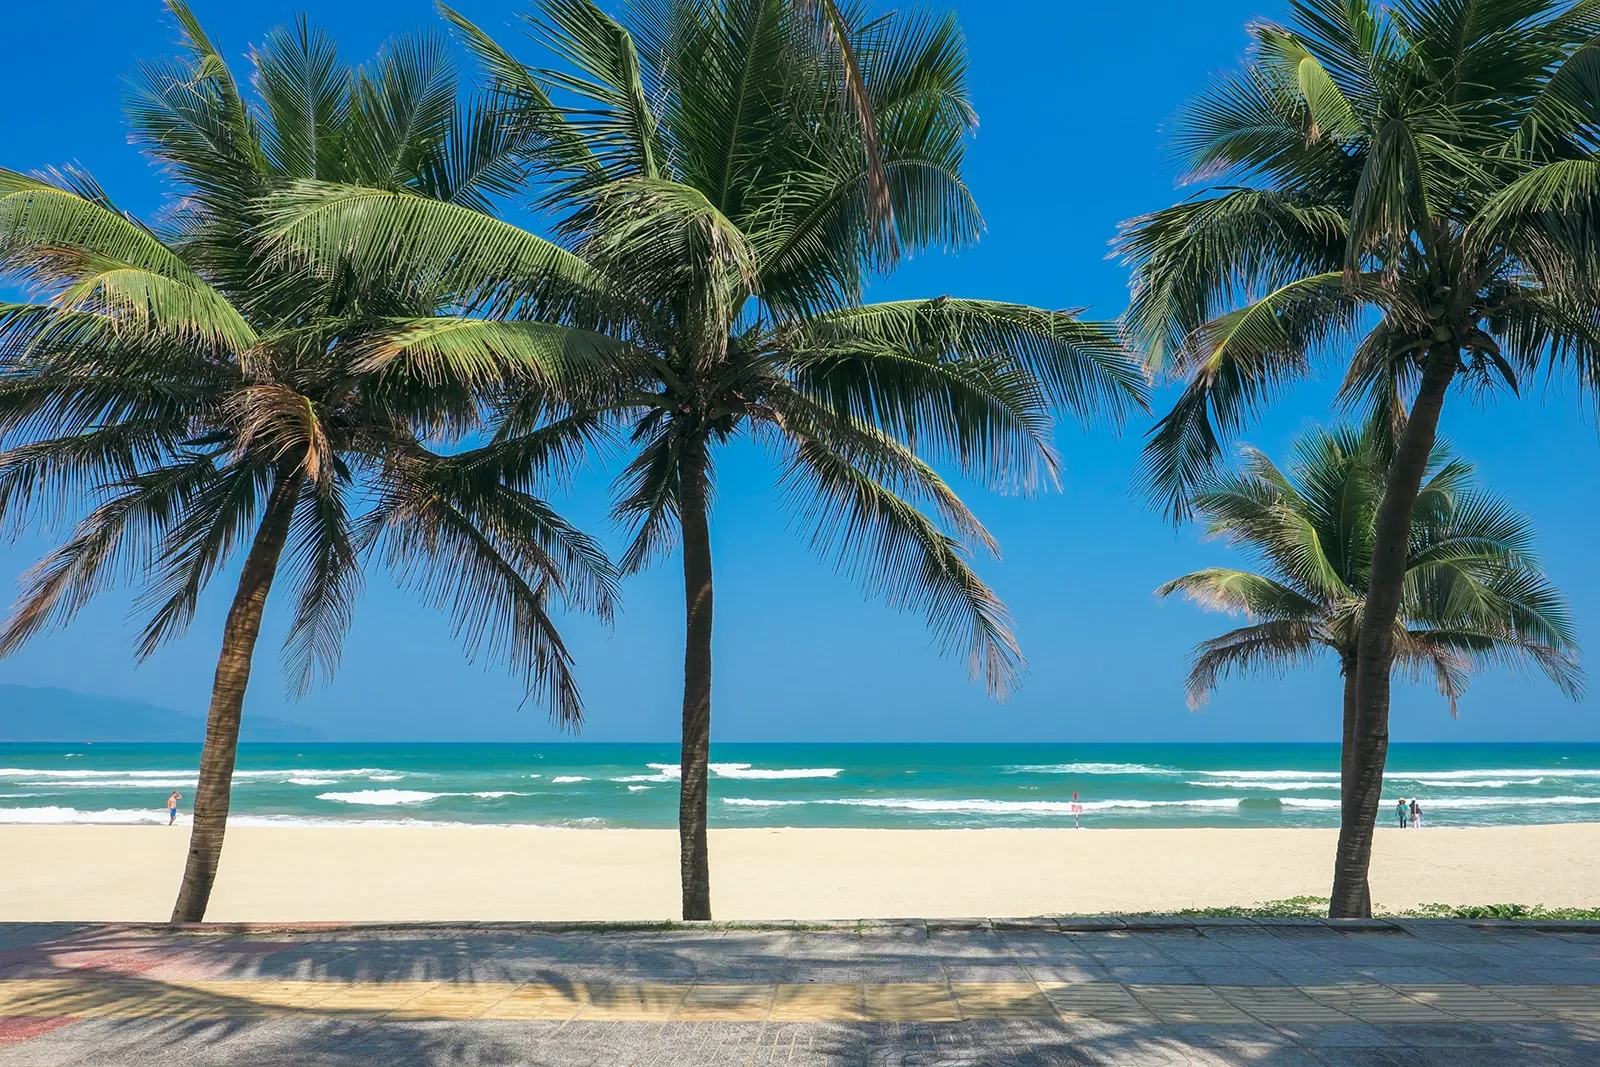 White sand beach, palm trees, blue skies and ocean.